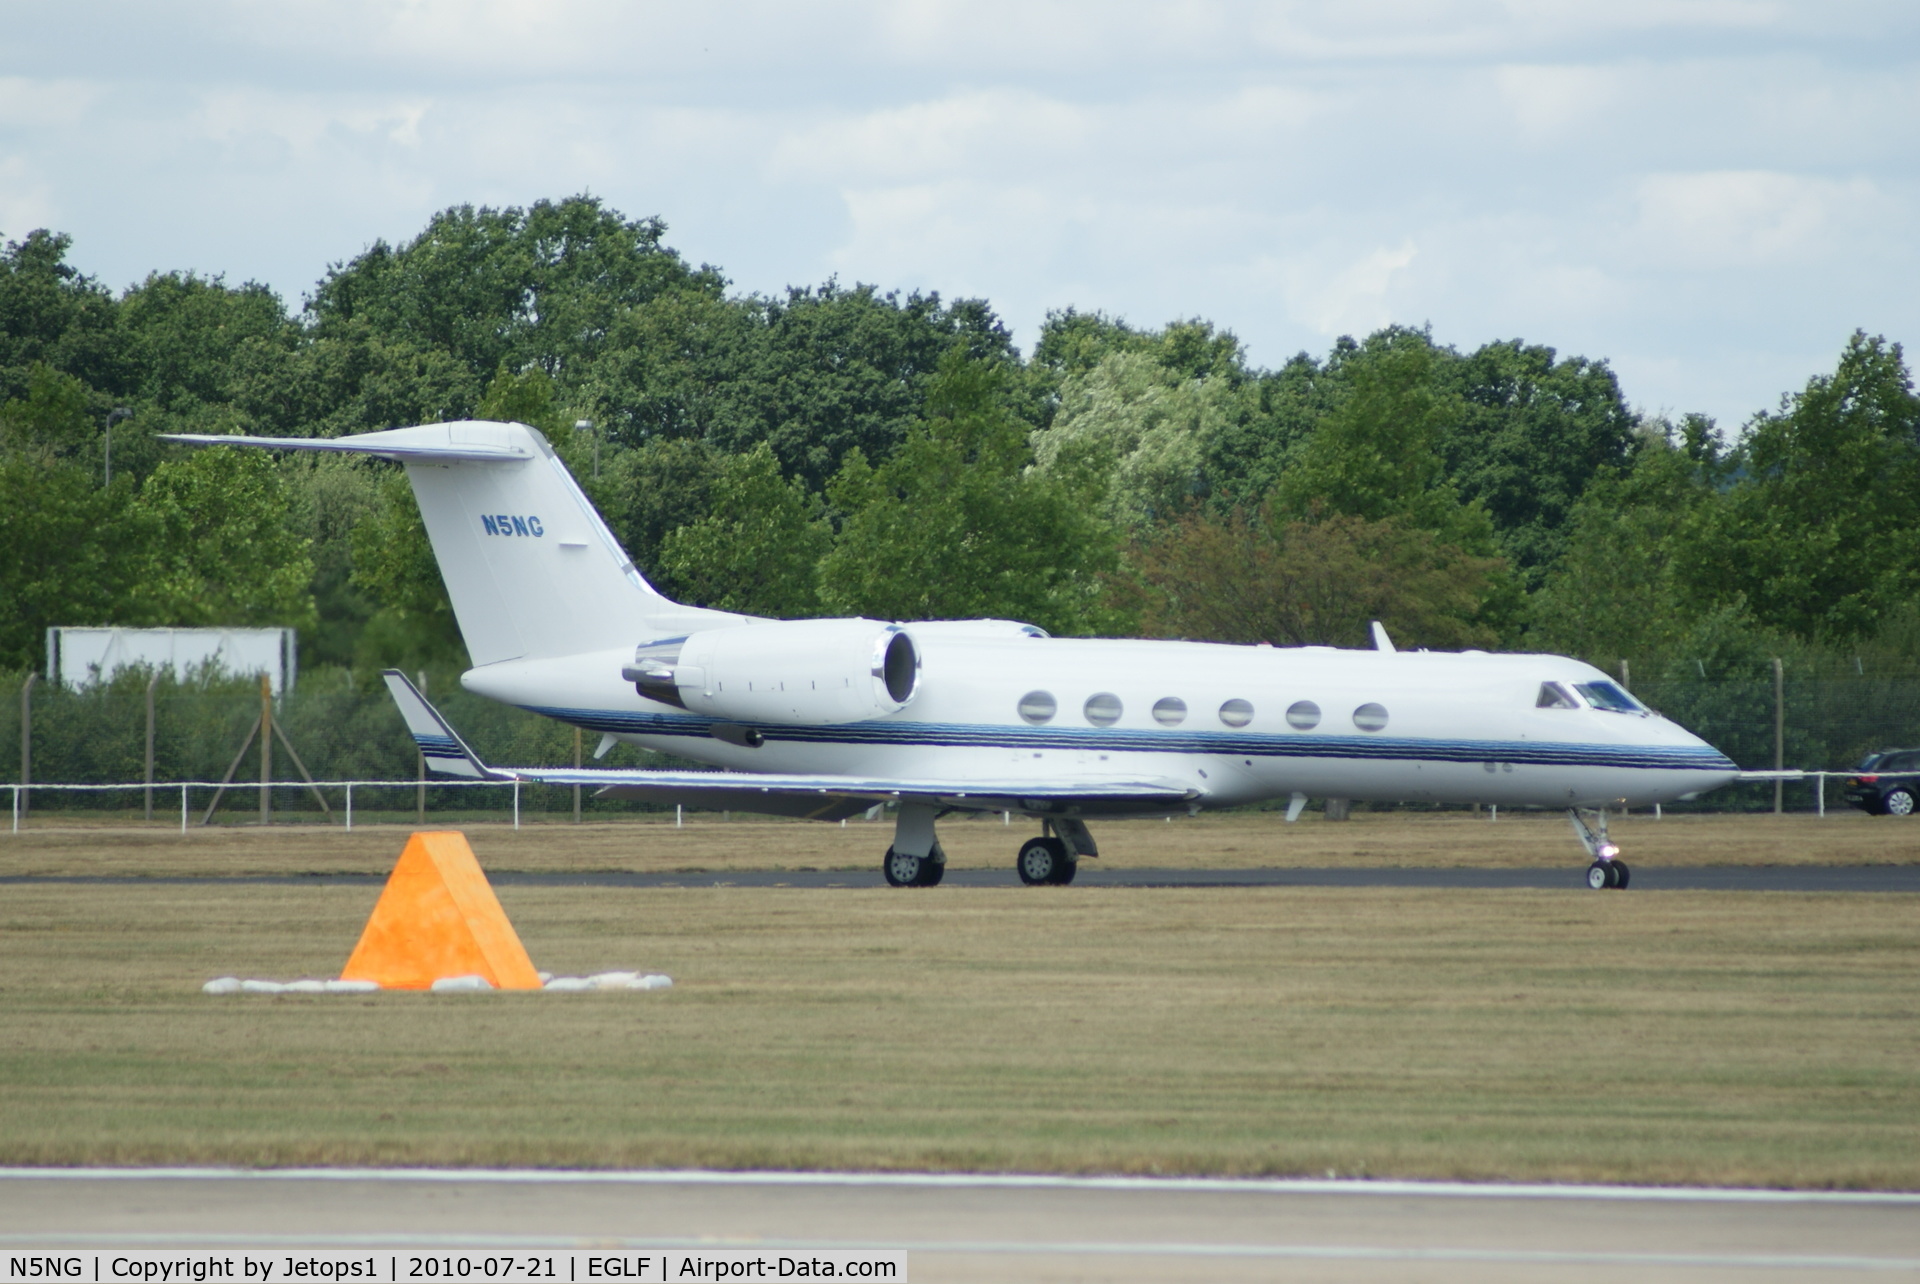 N5NG, 2002 Gulfstream Aerospace G-IV C/N 1485, Parked at Fboro airshow